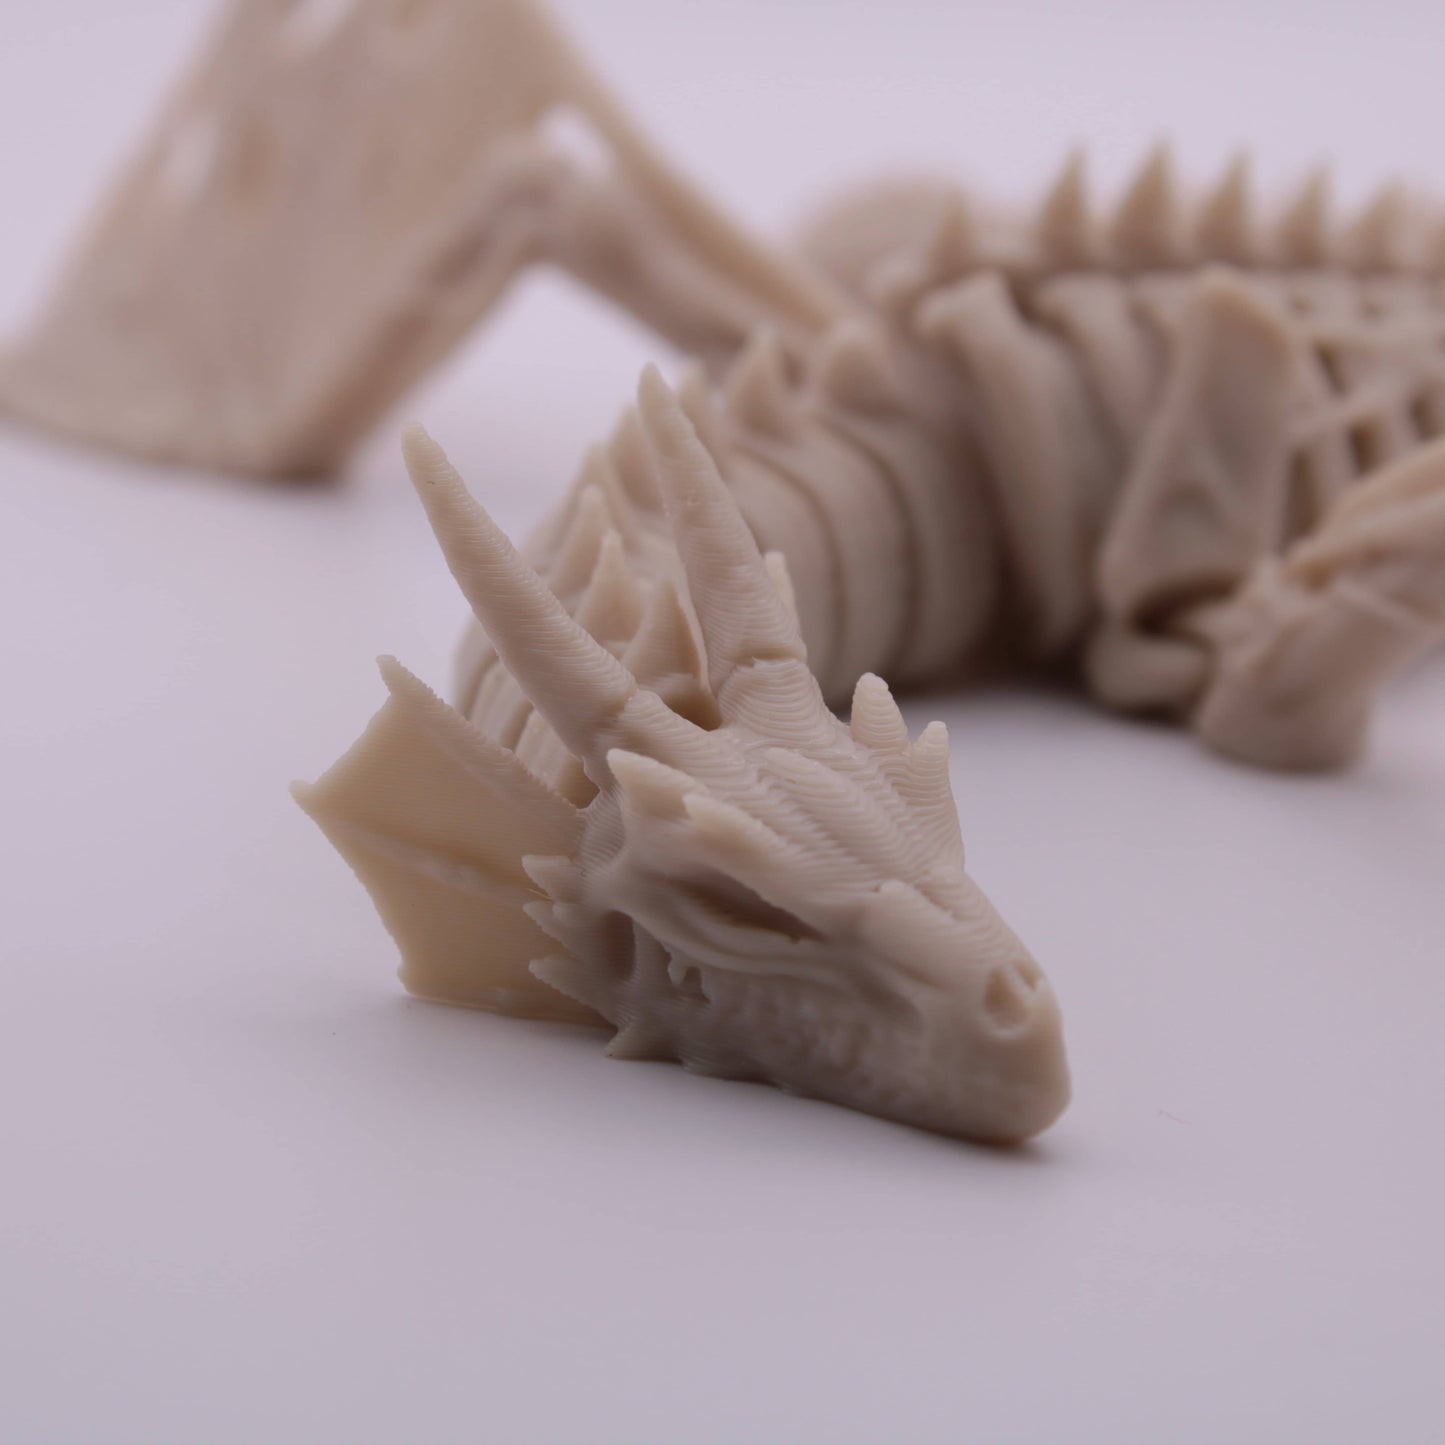 Articulated Bone Dragon